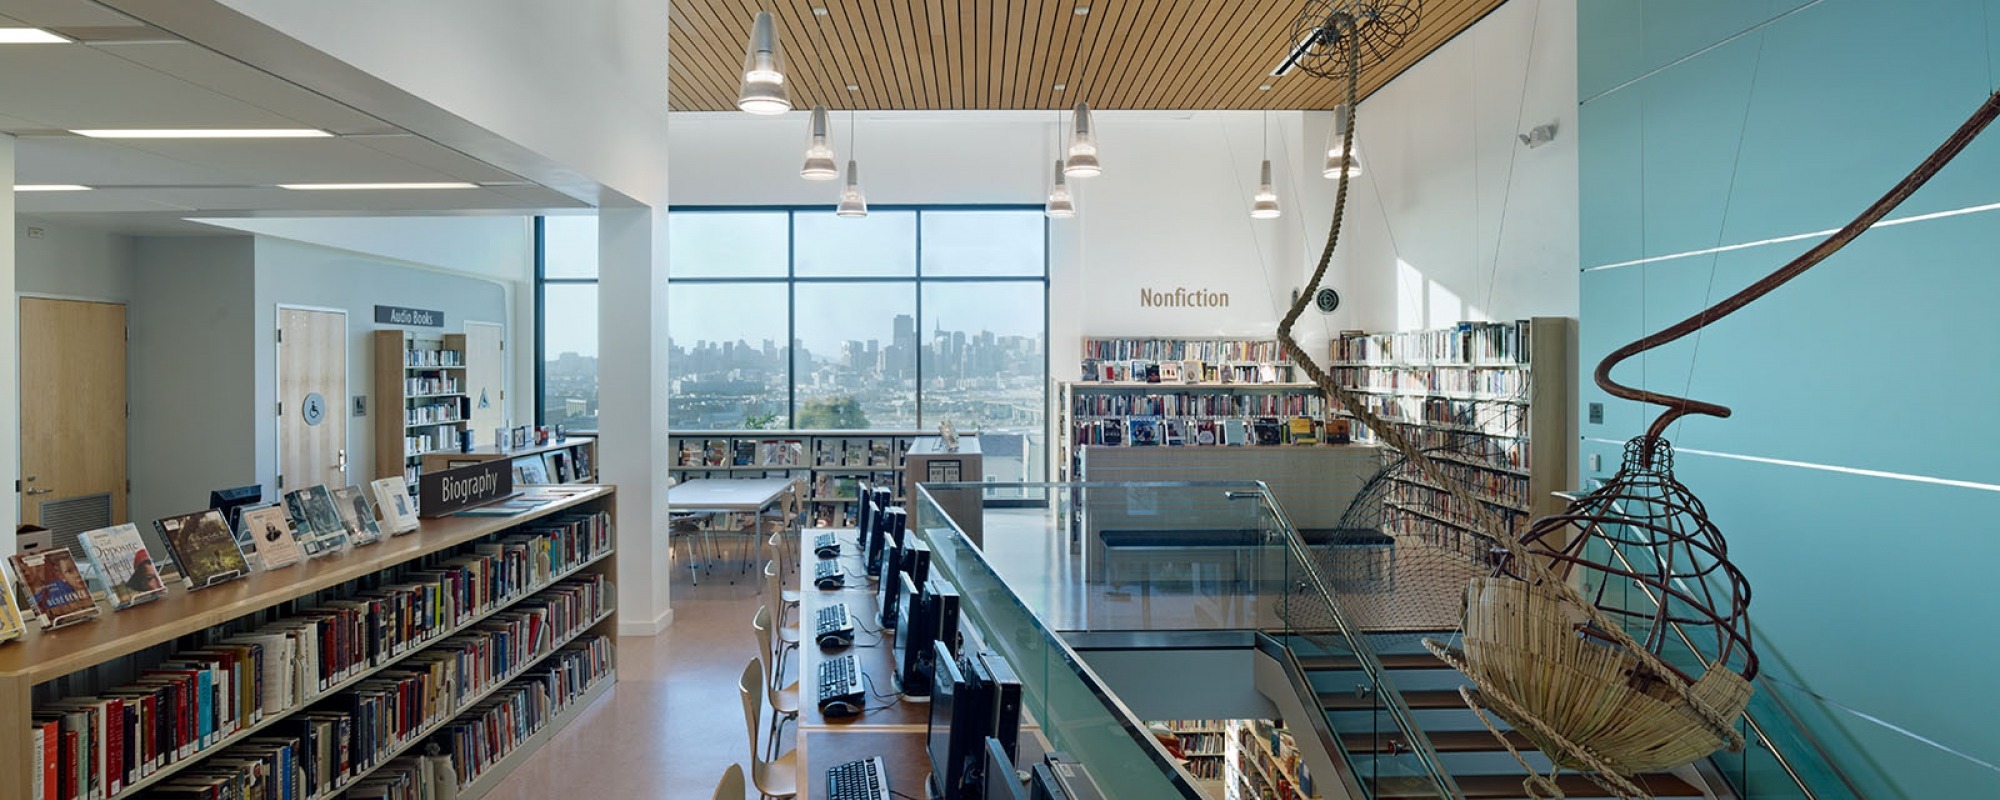 Potrero Branch Library